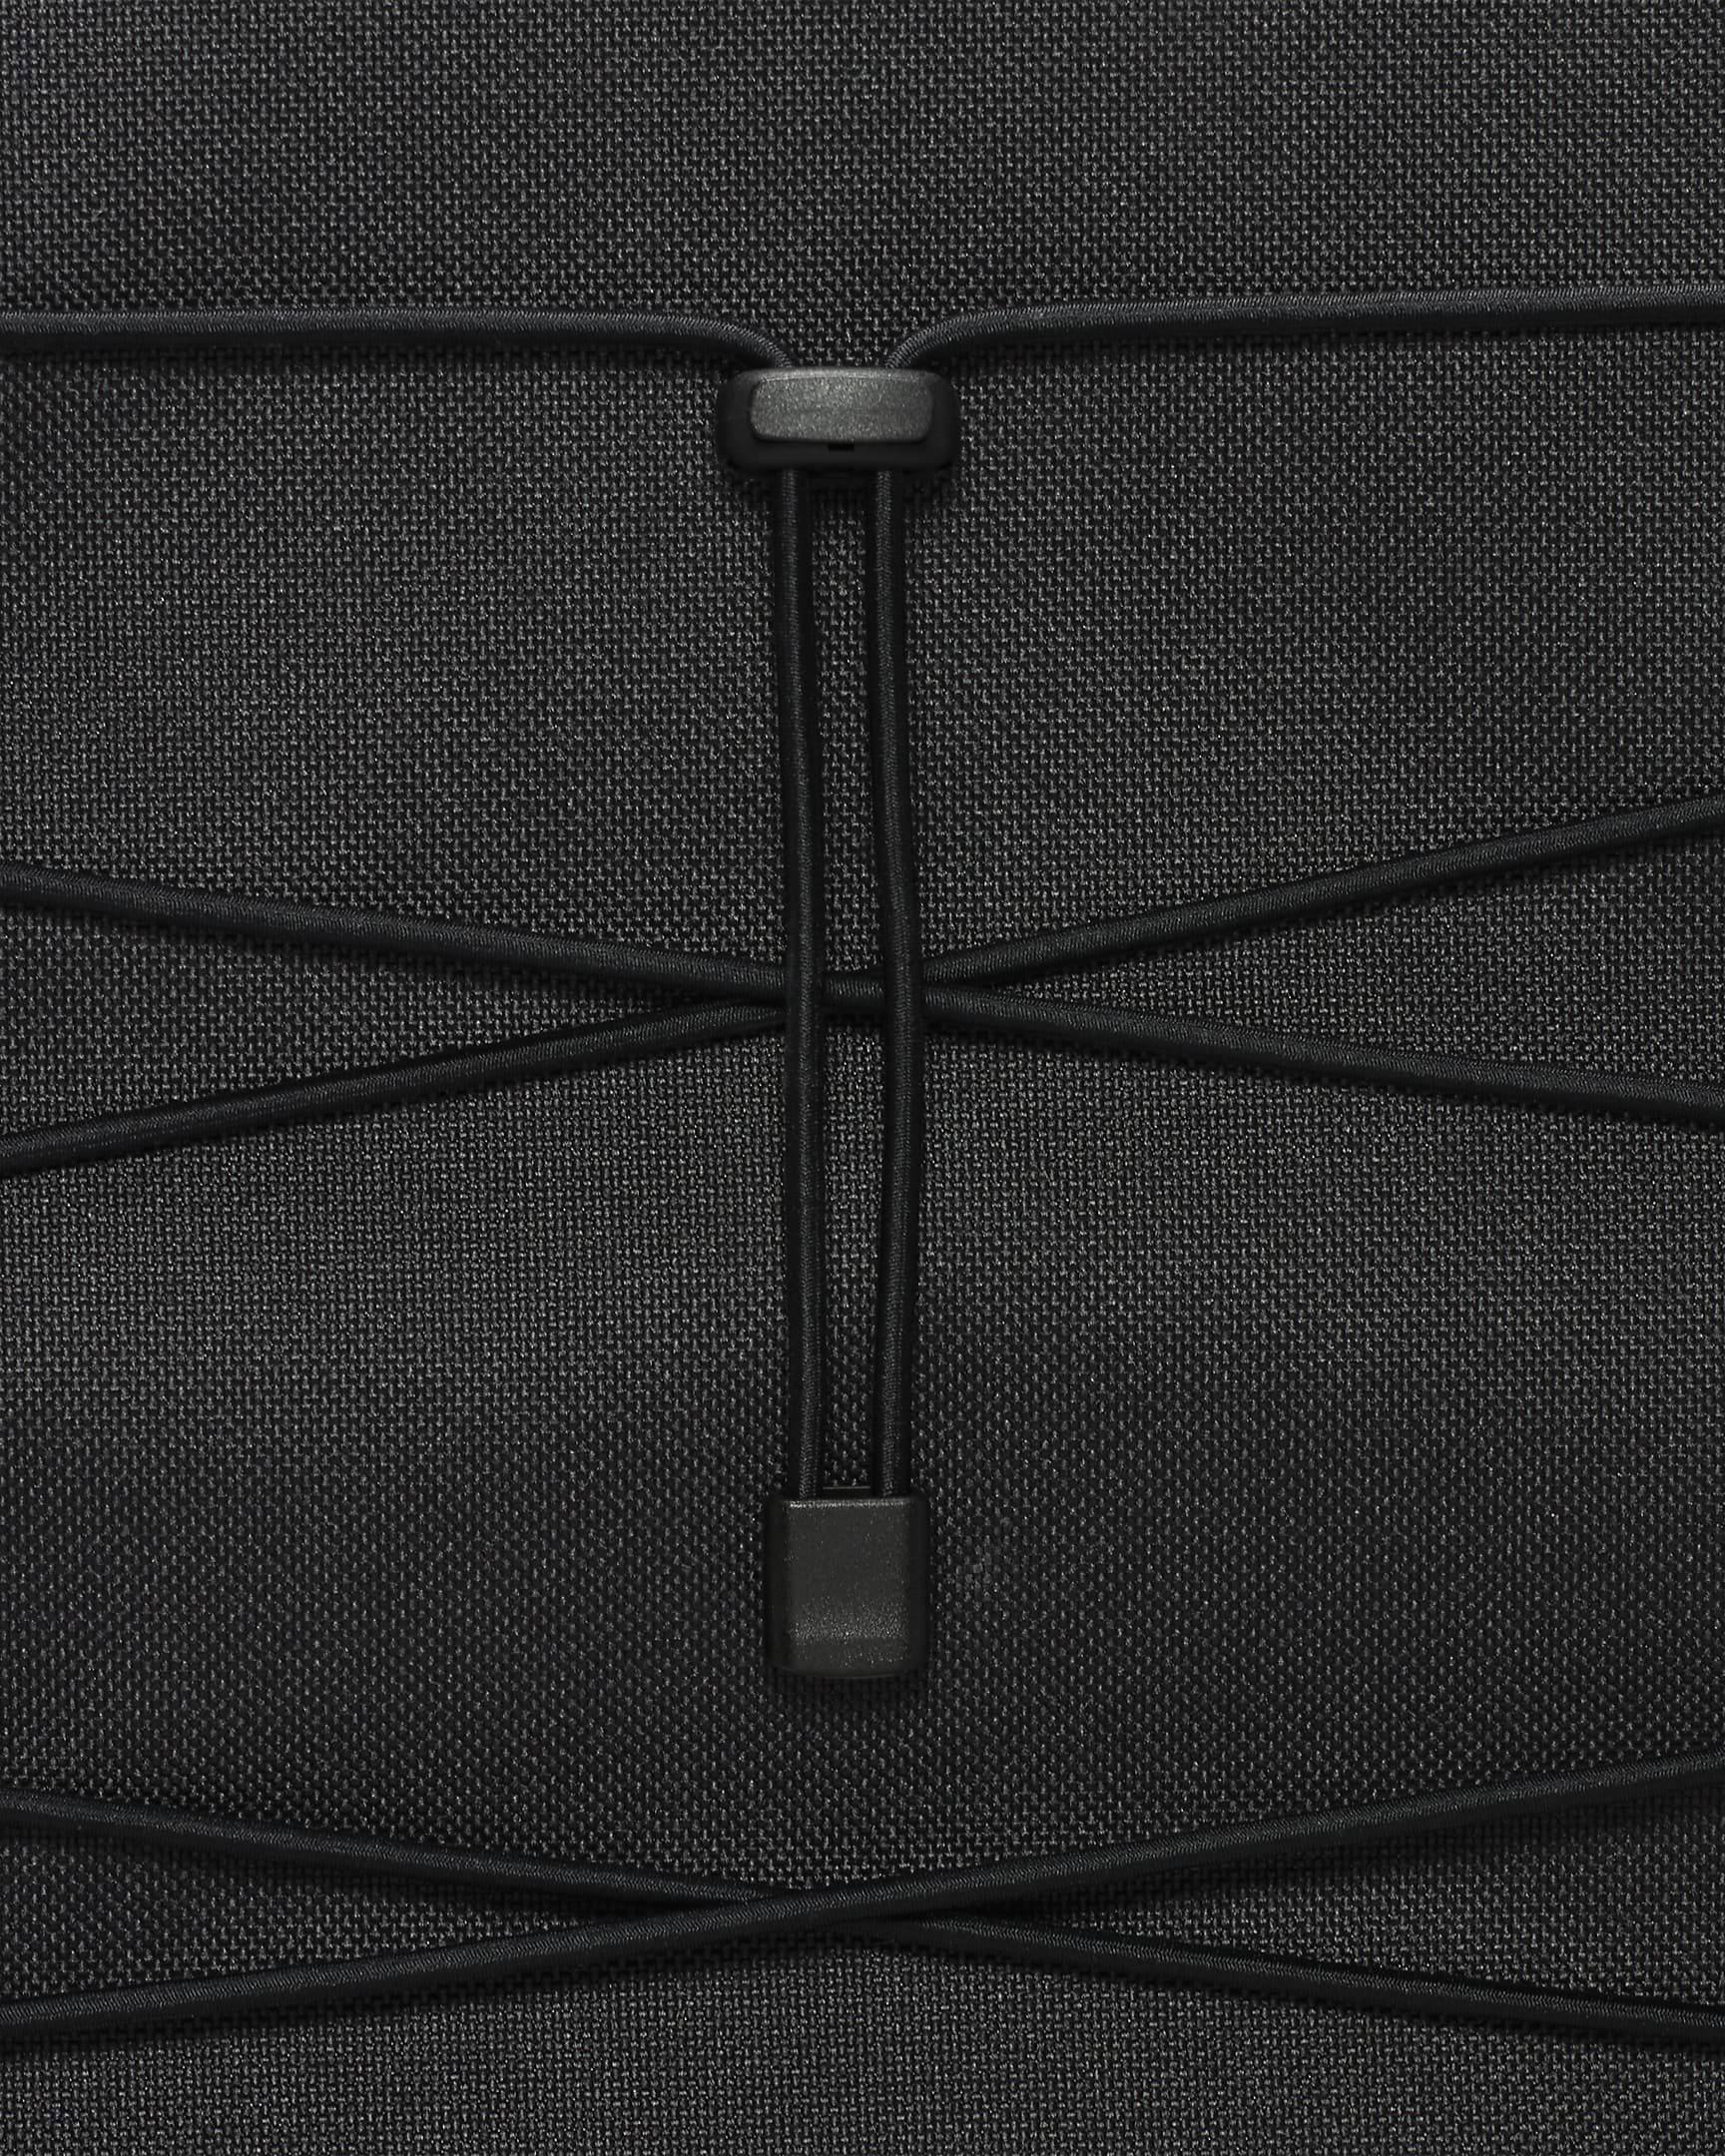 Nike Hayward 2.0 Backpack (26L) - Black/Anthracite/White